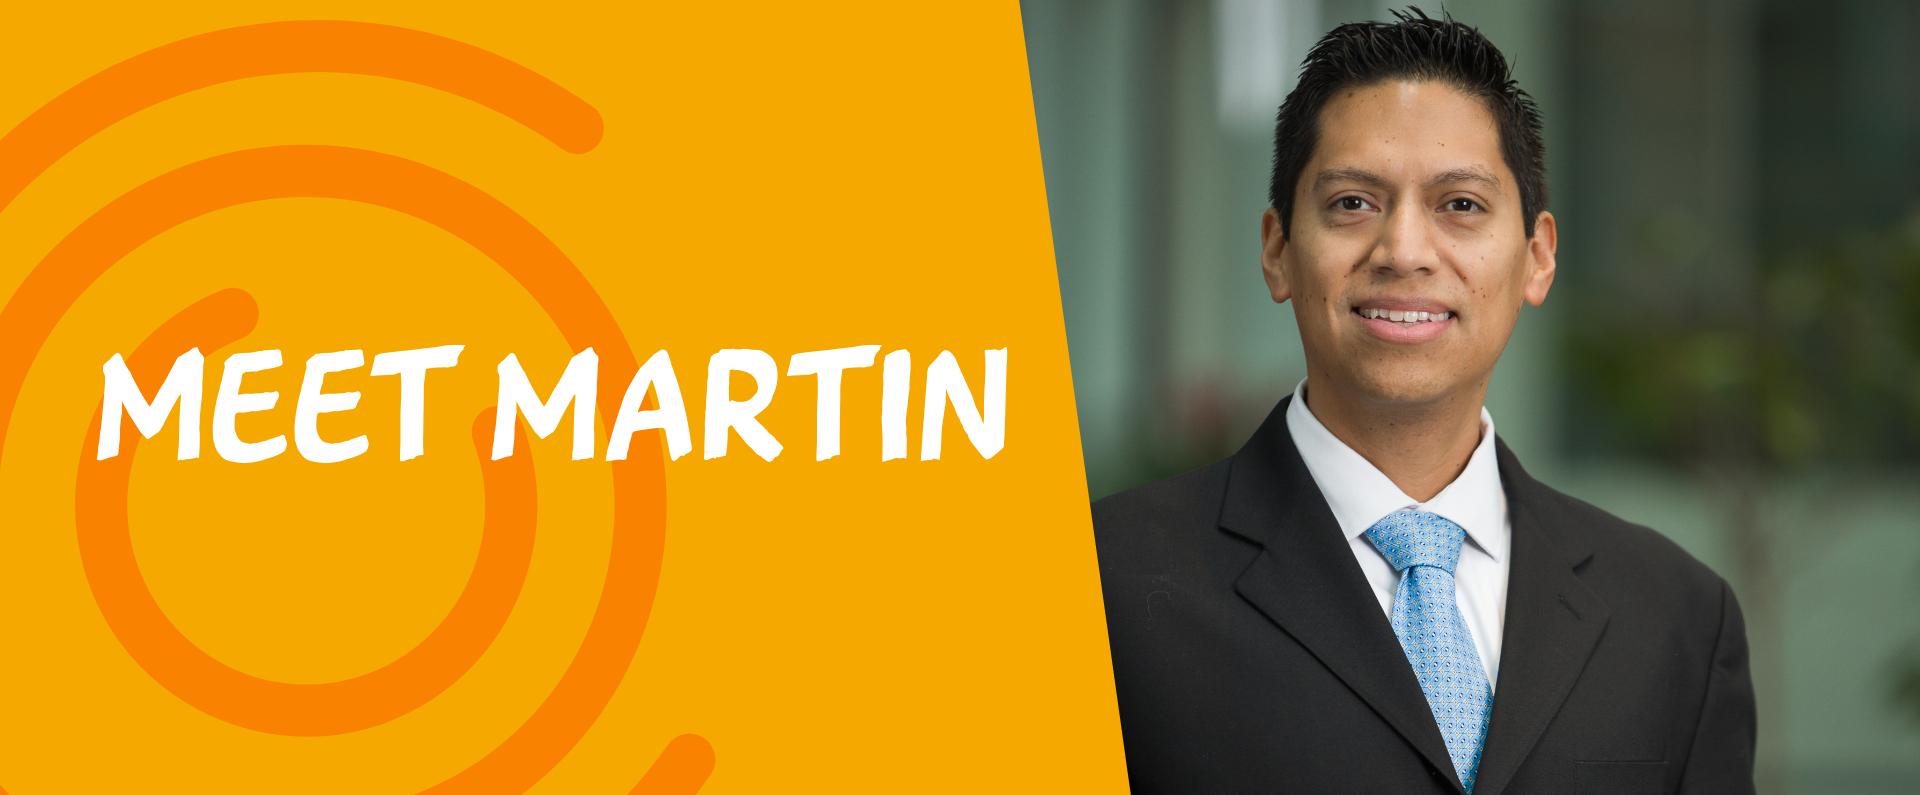 Meet Martin Blog Header-Max-Quality